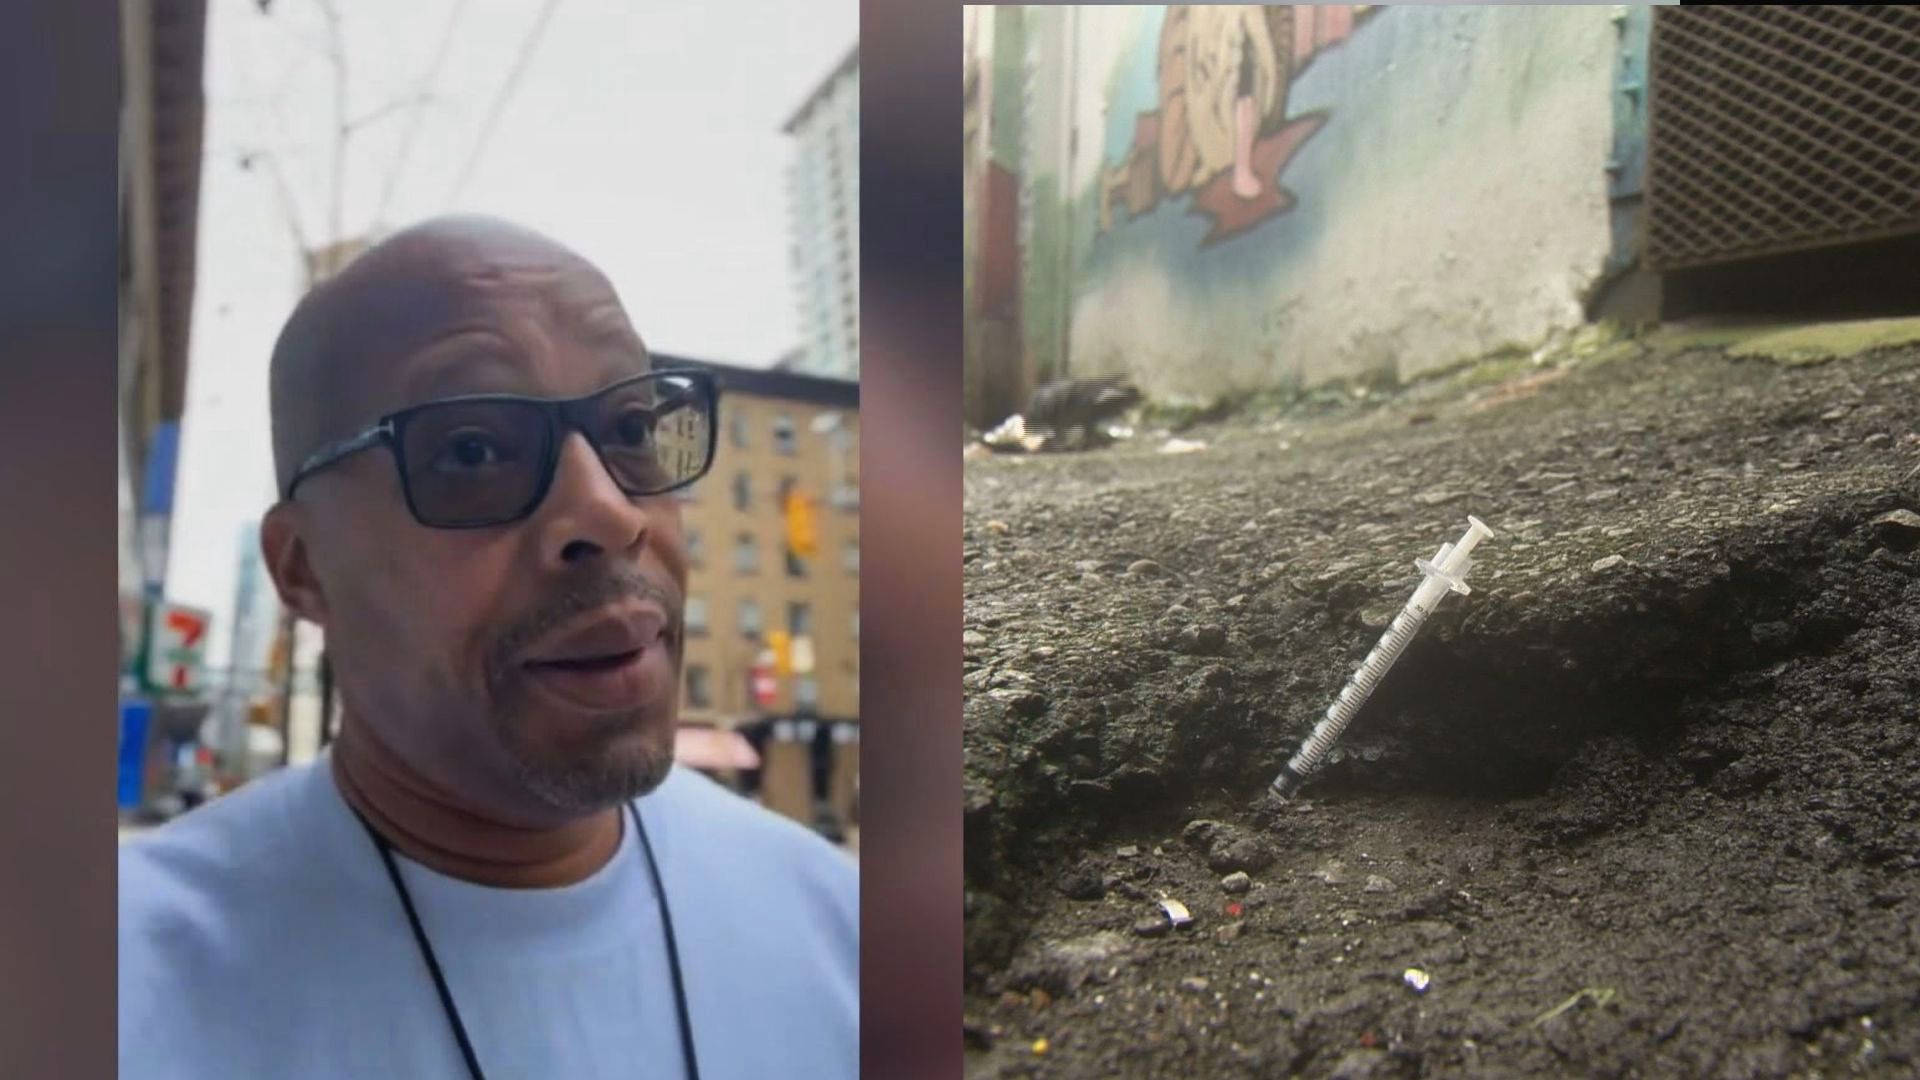 ‘Pretty rough around here’: Hip-hop legend Warren G walks the streets of Vancouver